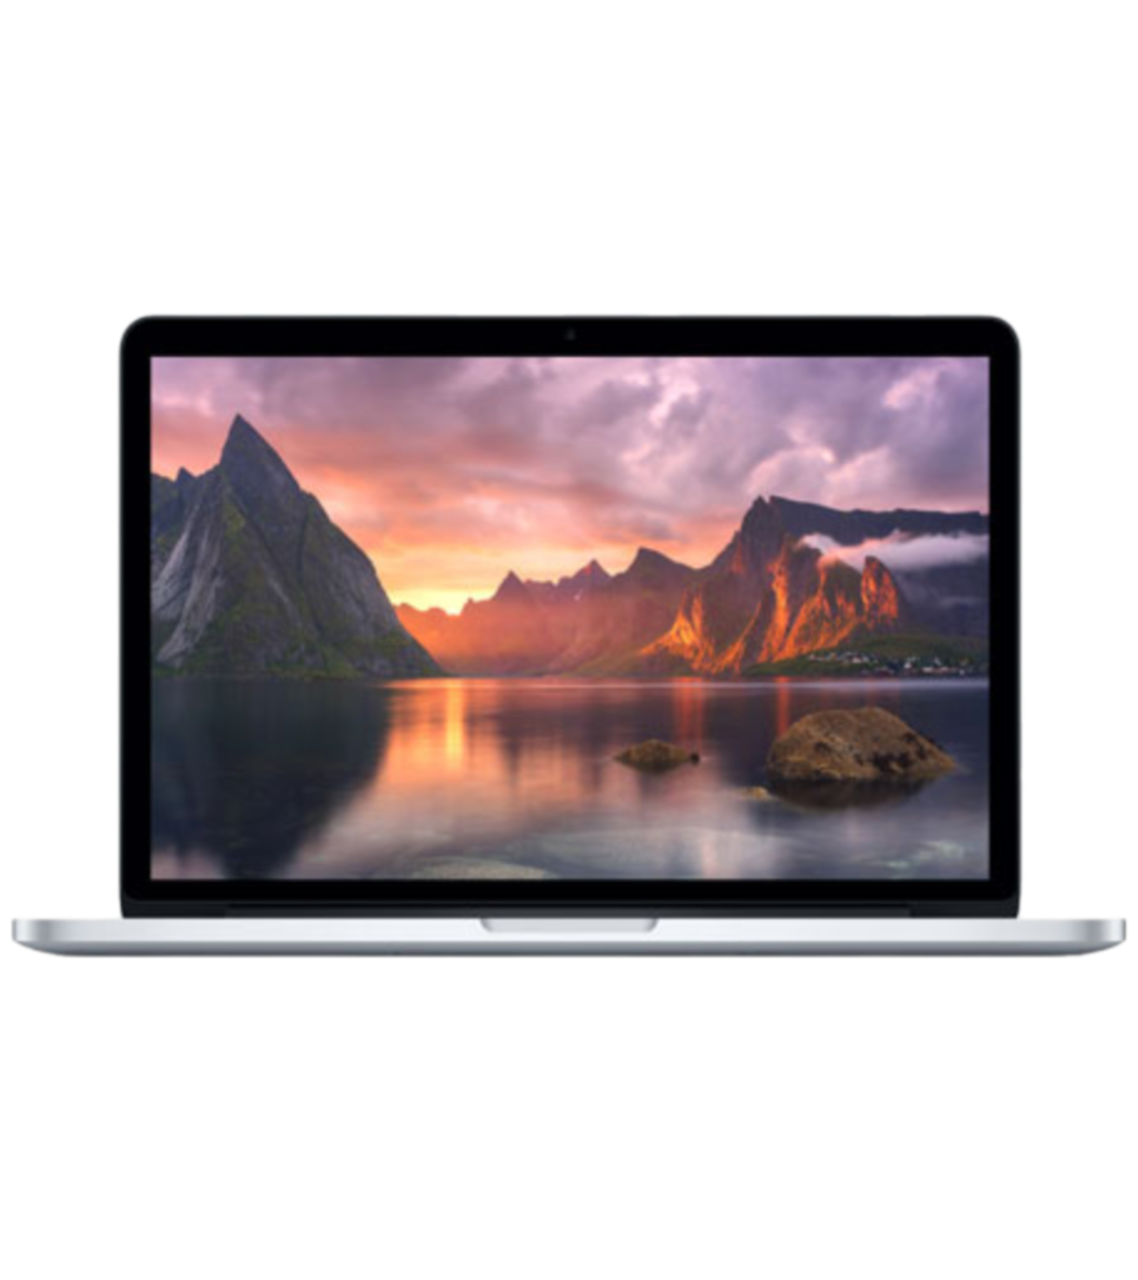 П/Г Ноутбук Apple MacBook Pro 13 i5/8/128GB Silver Cycle 350 2015